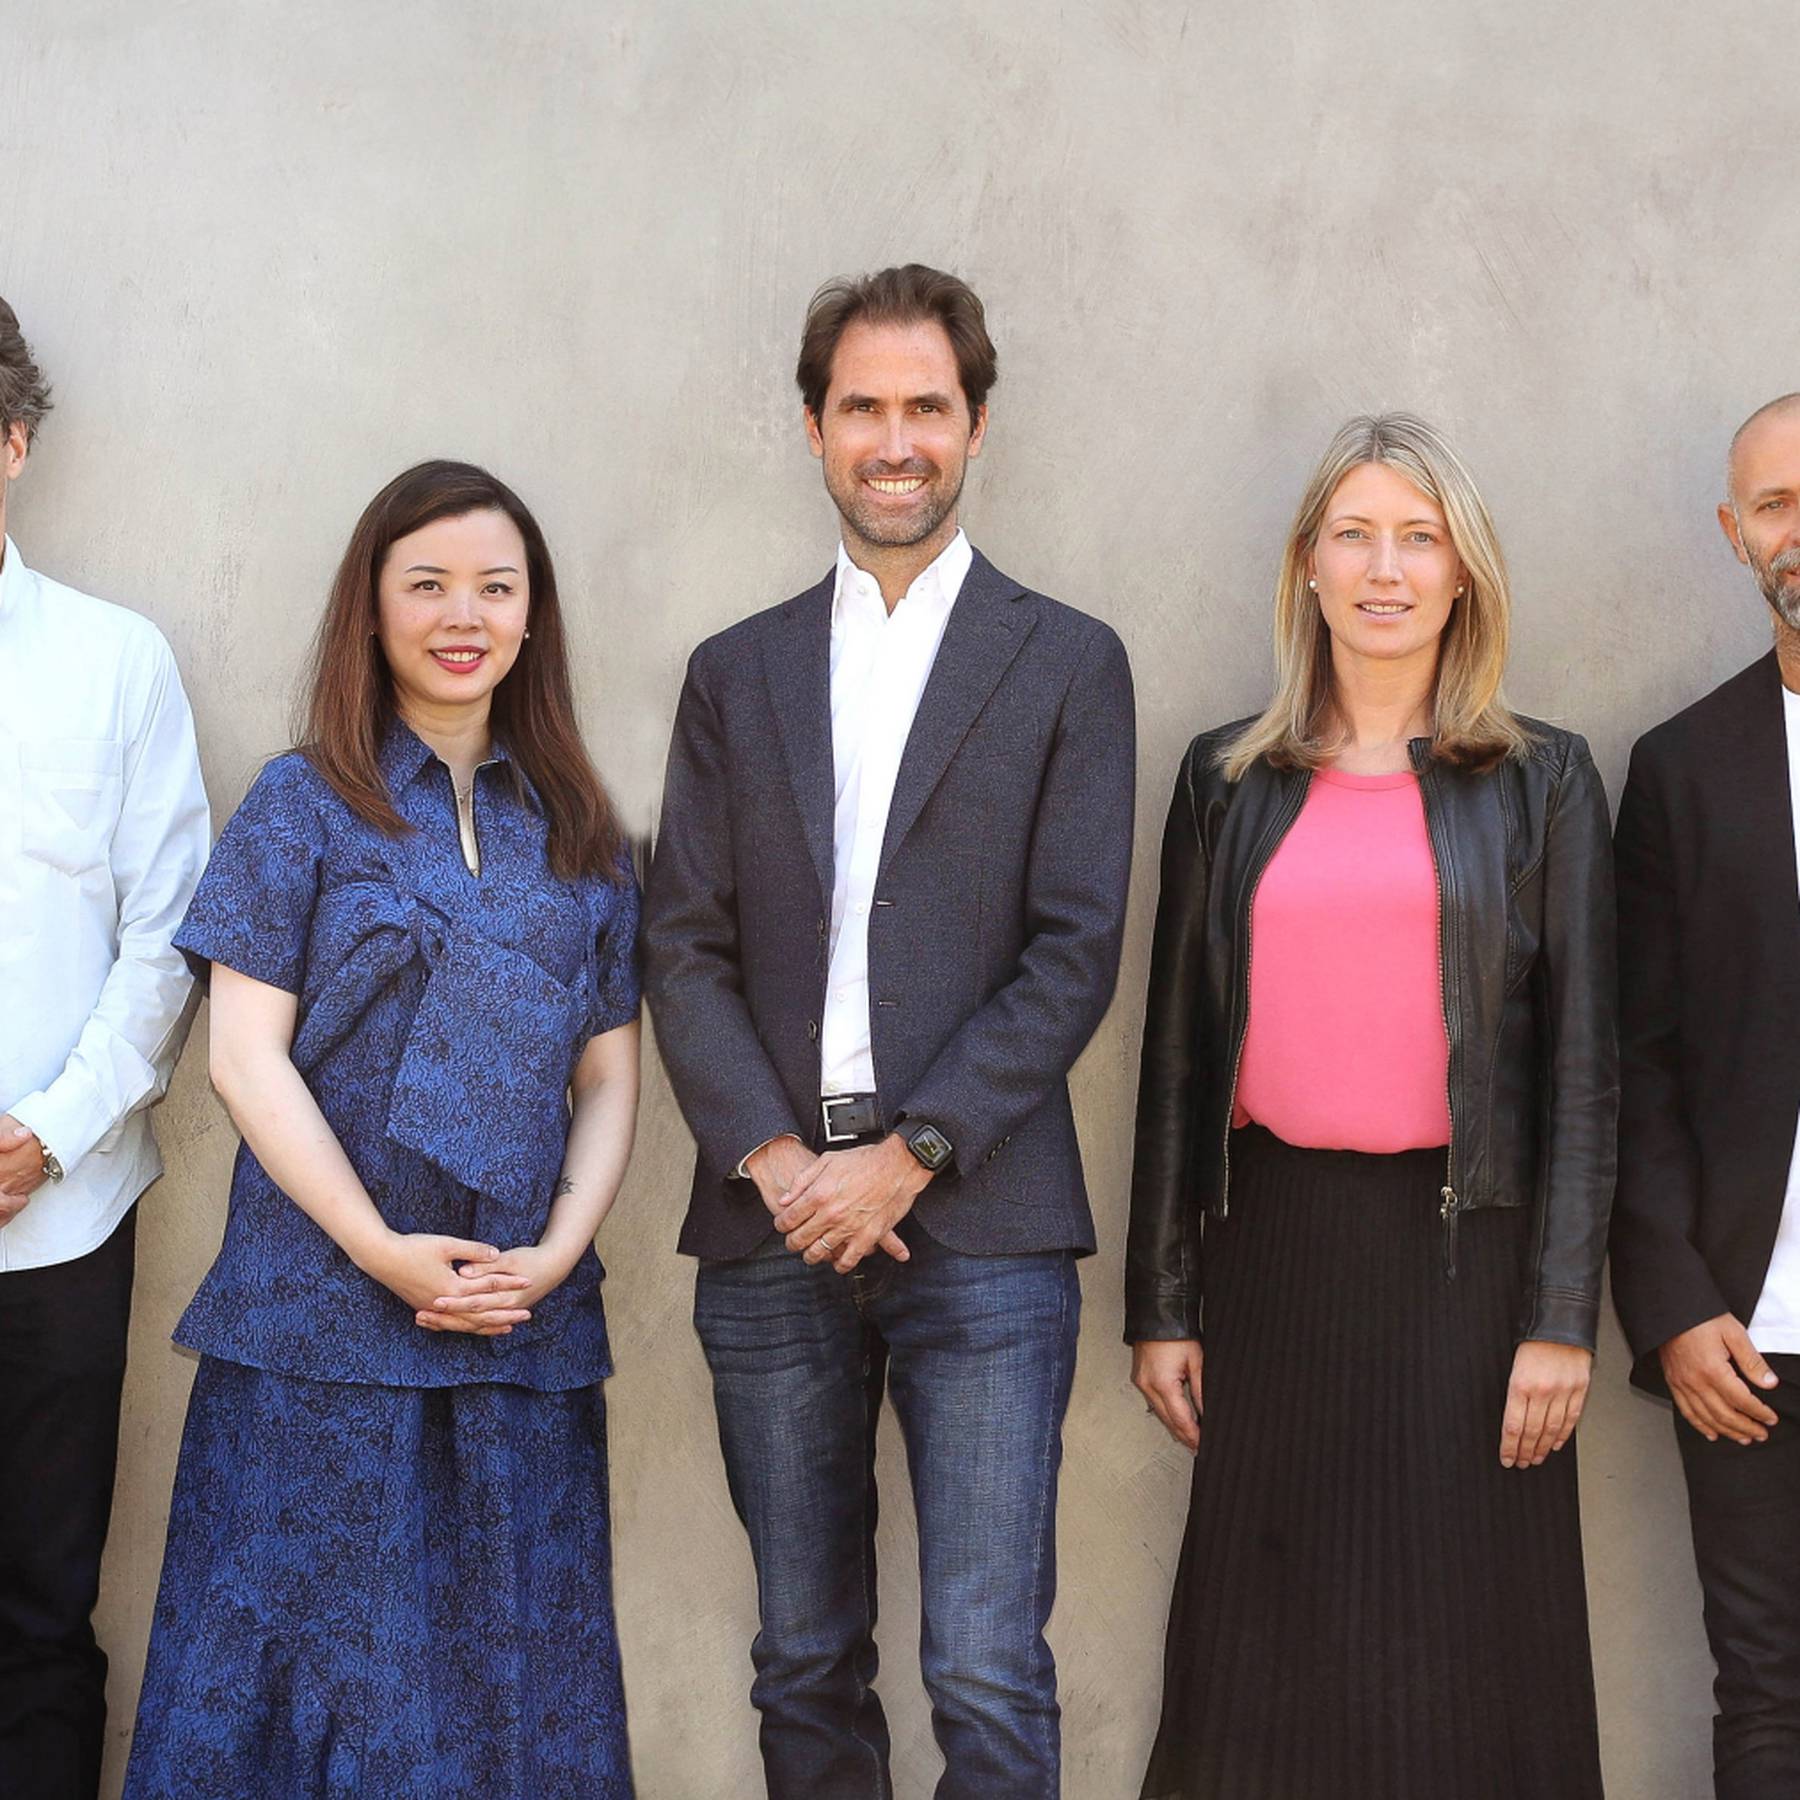 LVMH, Prada, Cartier Team On Aura Blockchain Consortium For Luxury